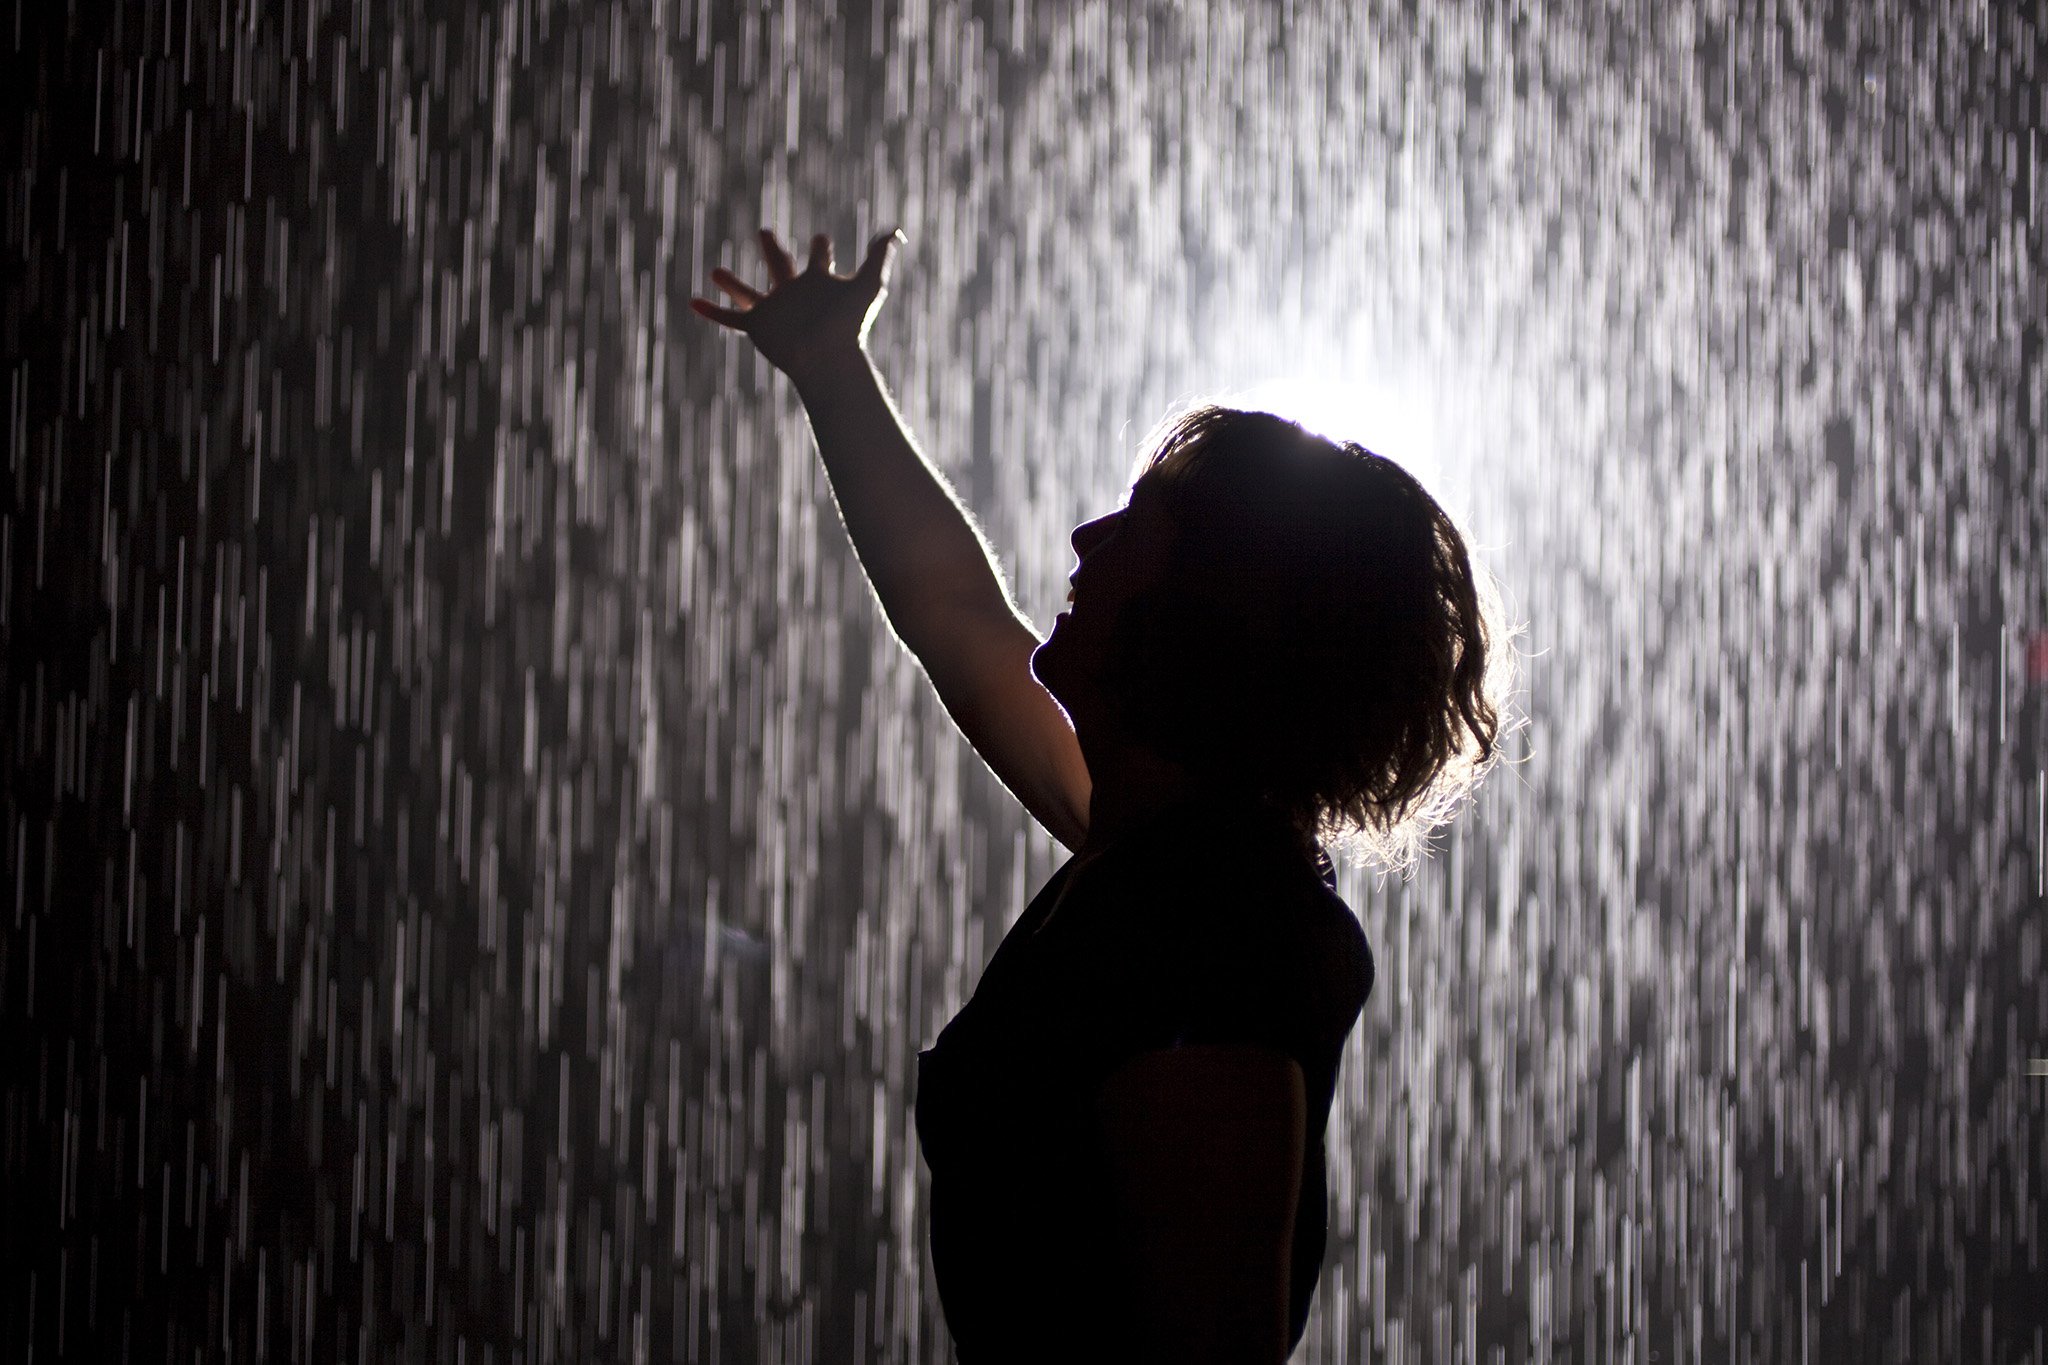 Org rain. Девушка дождь. Под дождем. Женщина под дождем. Девушка танцует под дождем.